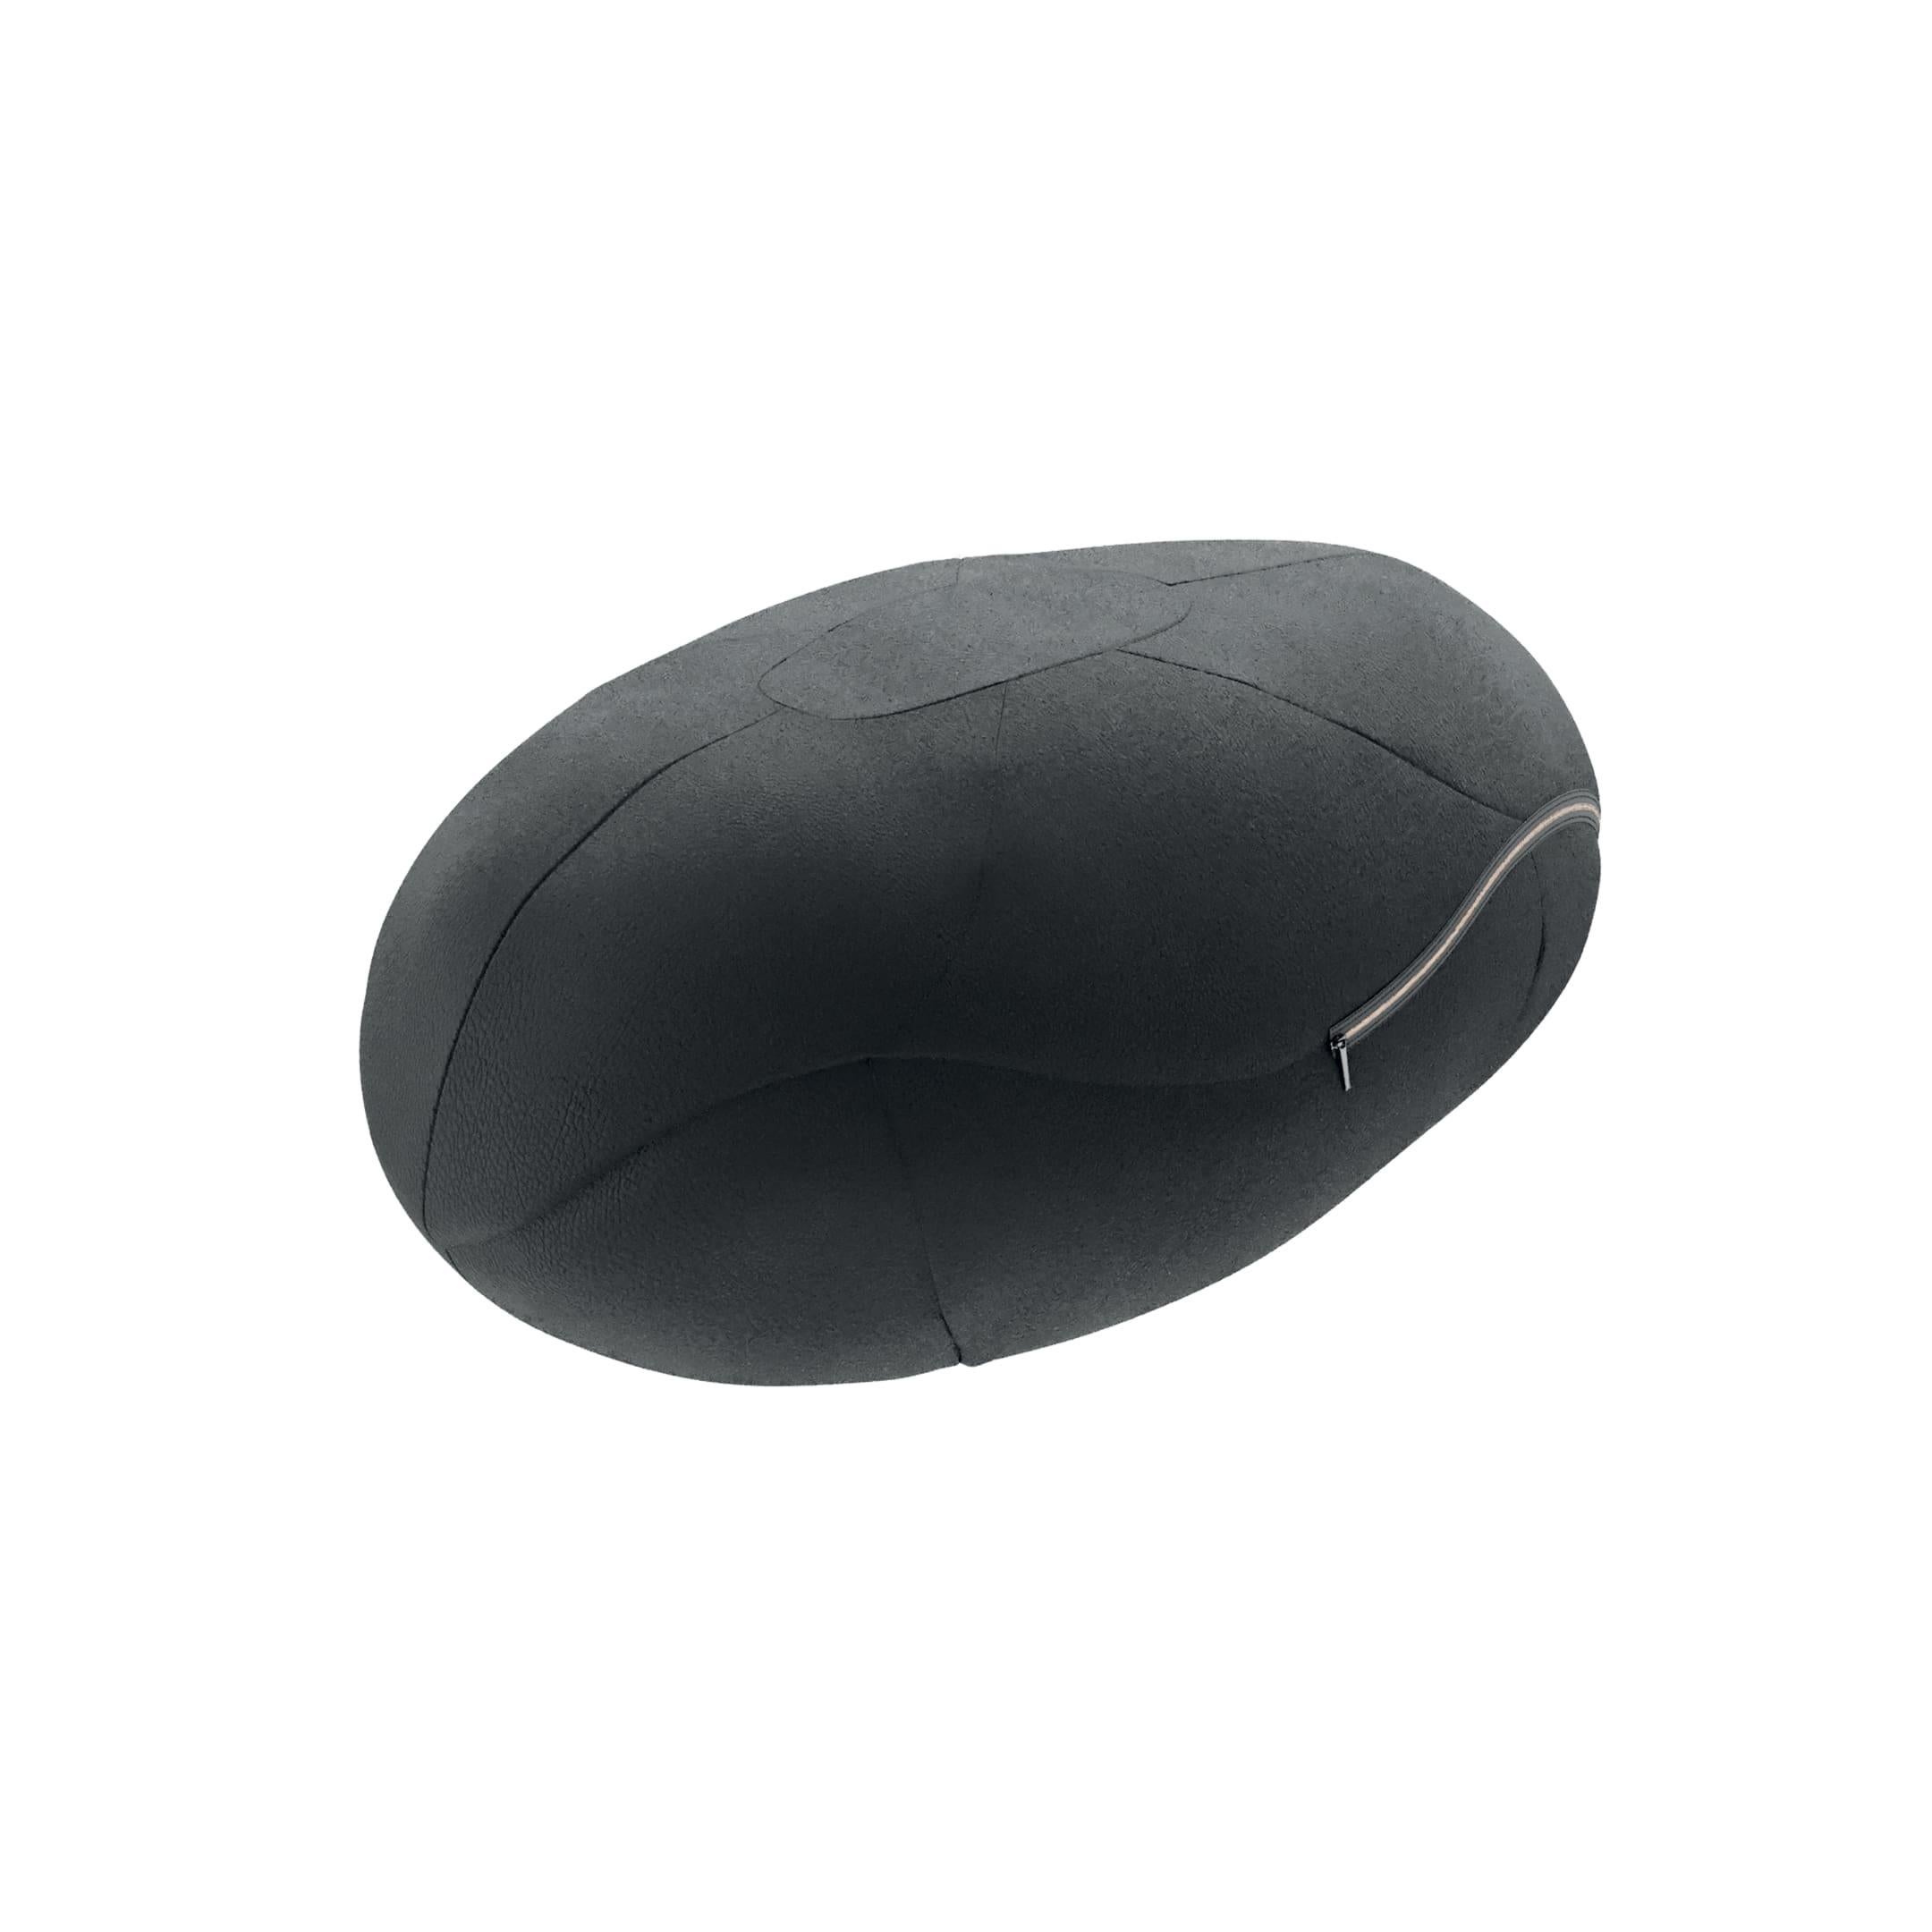 Modern Slate Stone Black Large Floor Cushion, for Kid's Playroom or Pet's Comfort